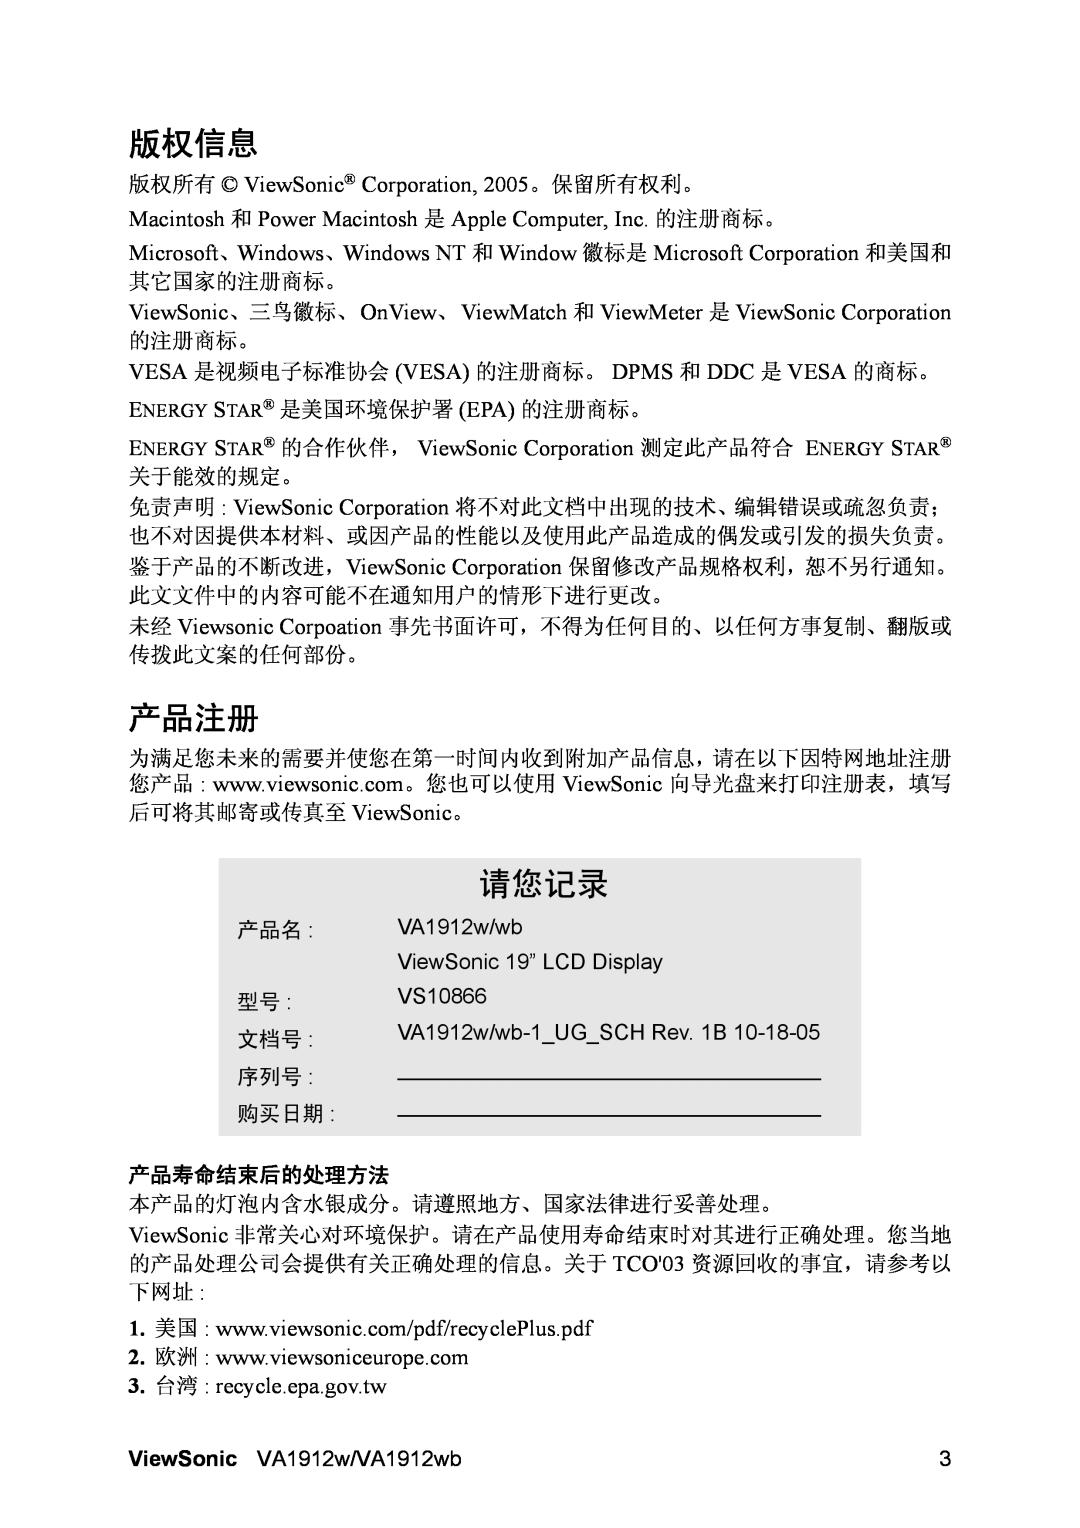 ViewSonic VA1912w-1, VA1912wb-1 manual 版权信息, 产品注册, 请您记录, 3. 台湾 recycle.epa.gov.tw, 产品寿命结束后的处理方法 